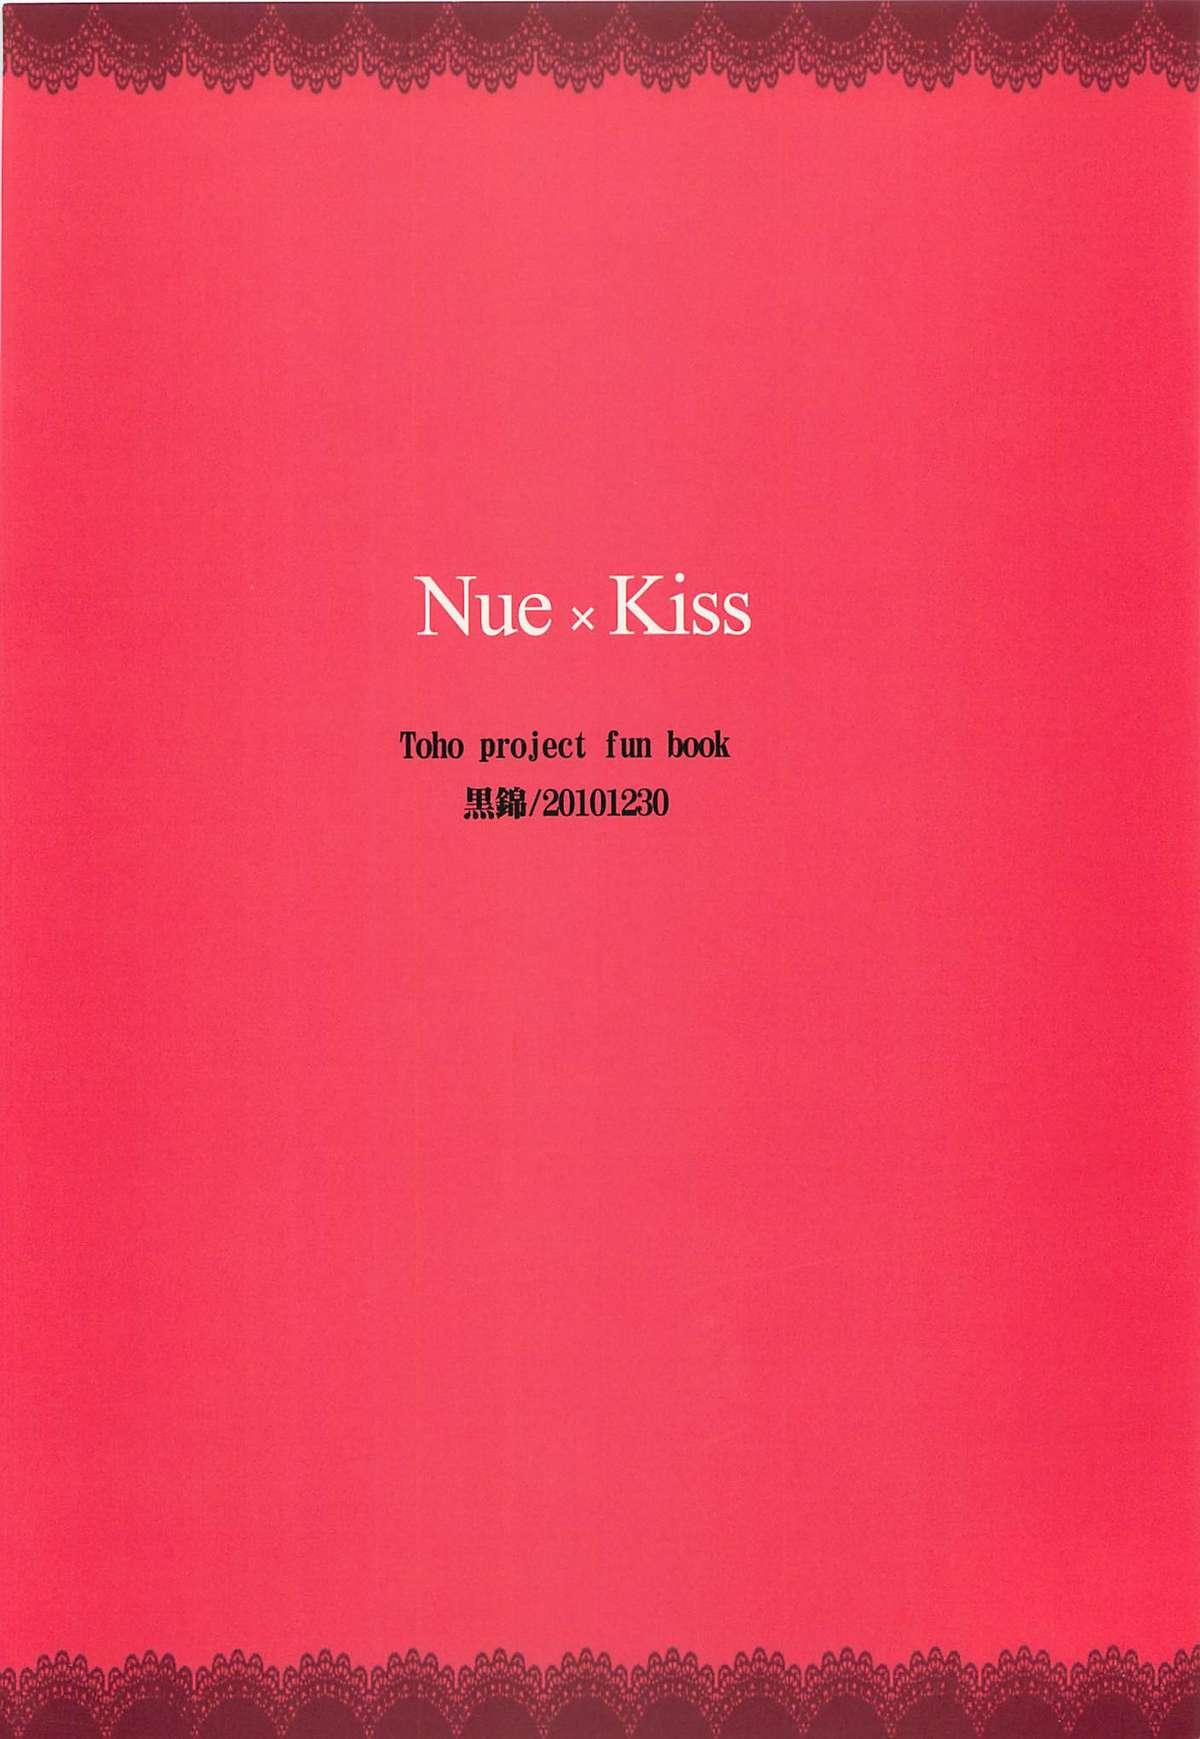 Nue x Kiss 29